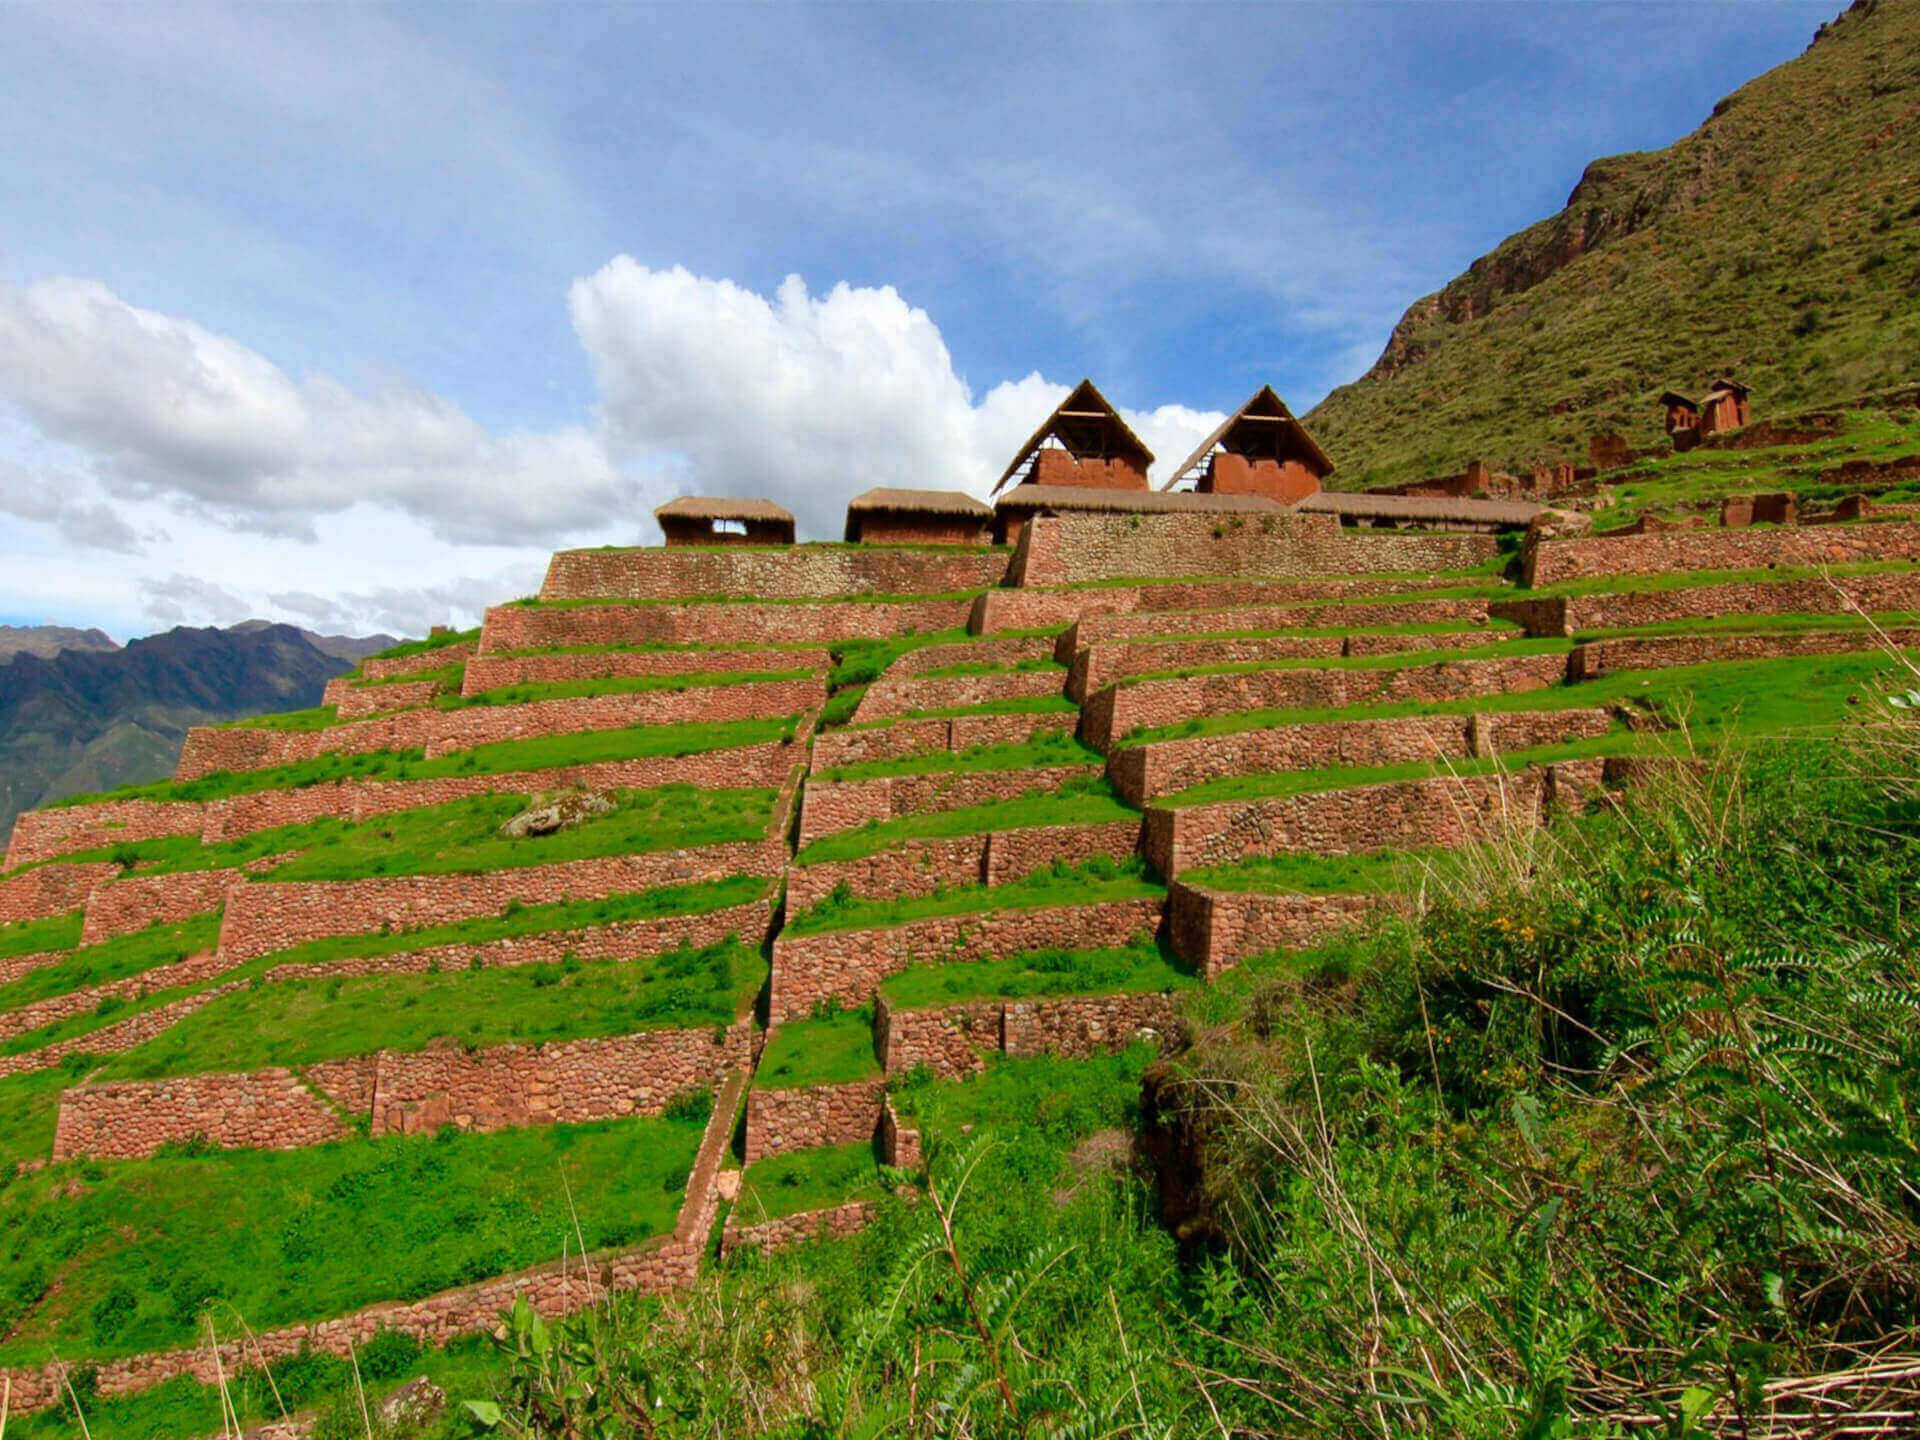 Huchuy Qosqo on Horseback and Machu Picchu